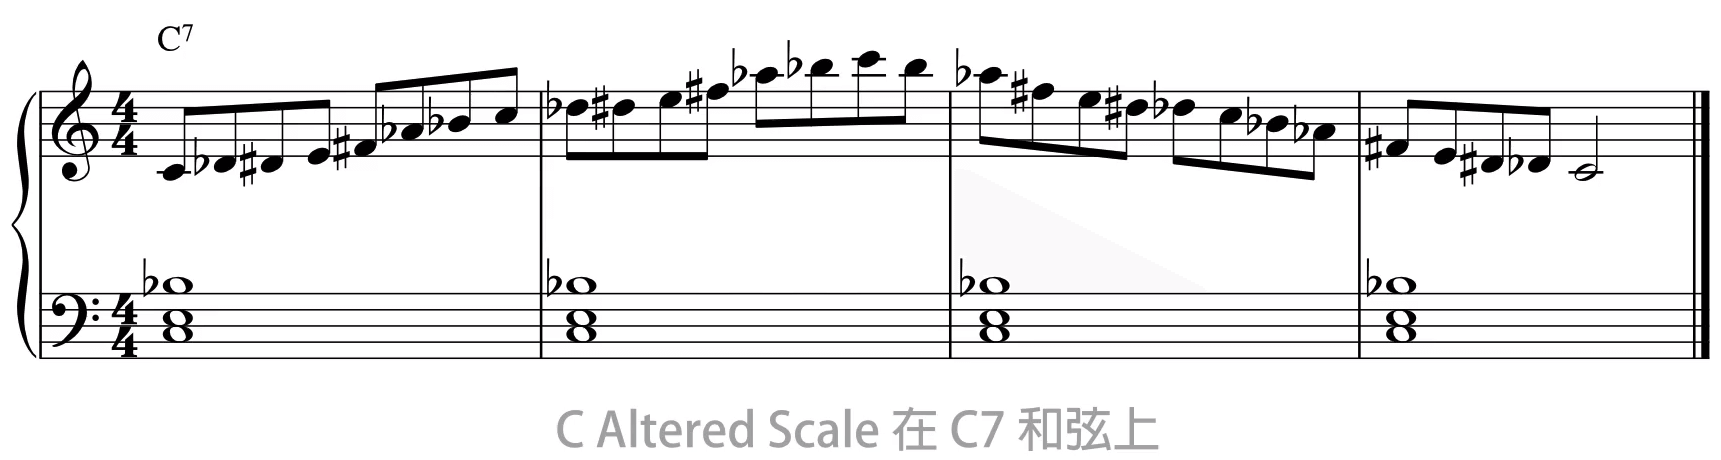 C Altered Scale 在 C7 和弦上